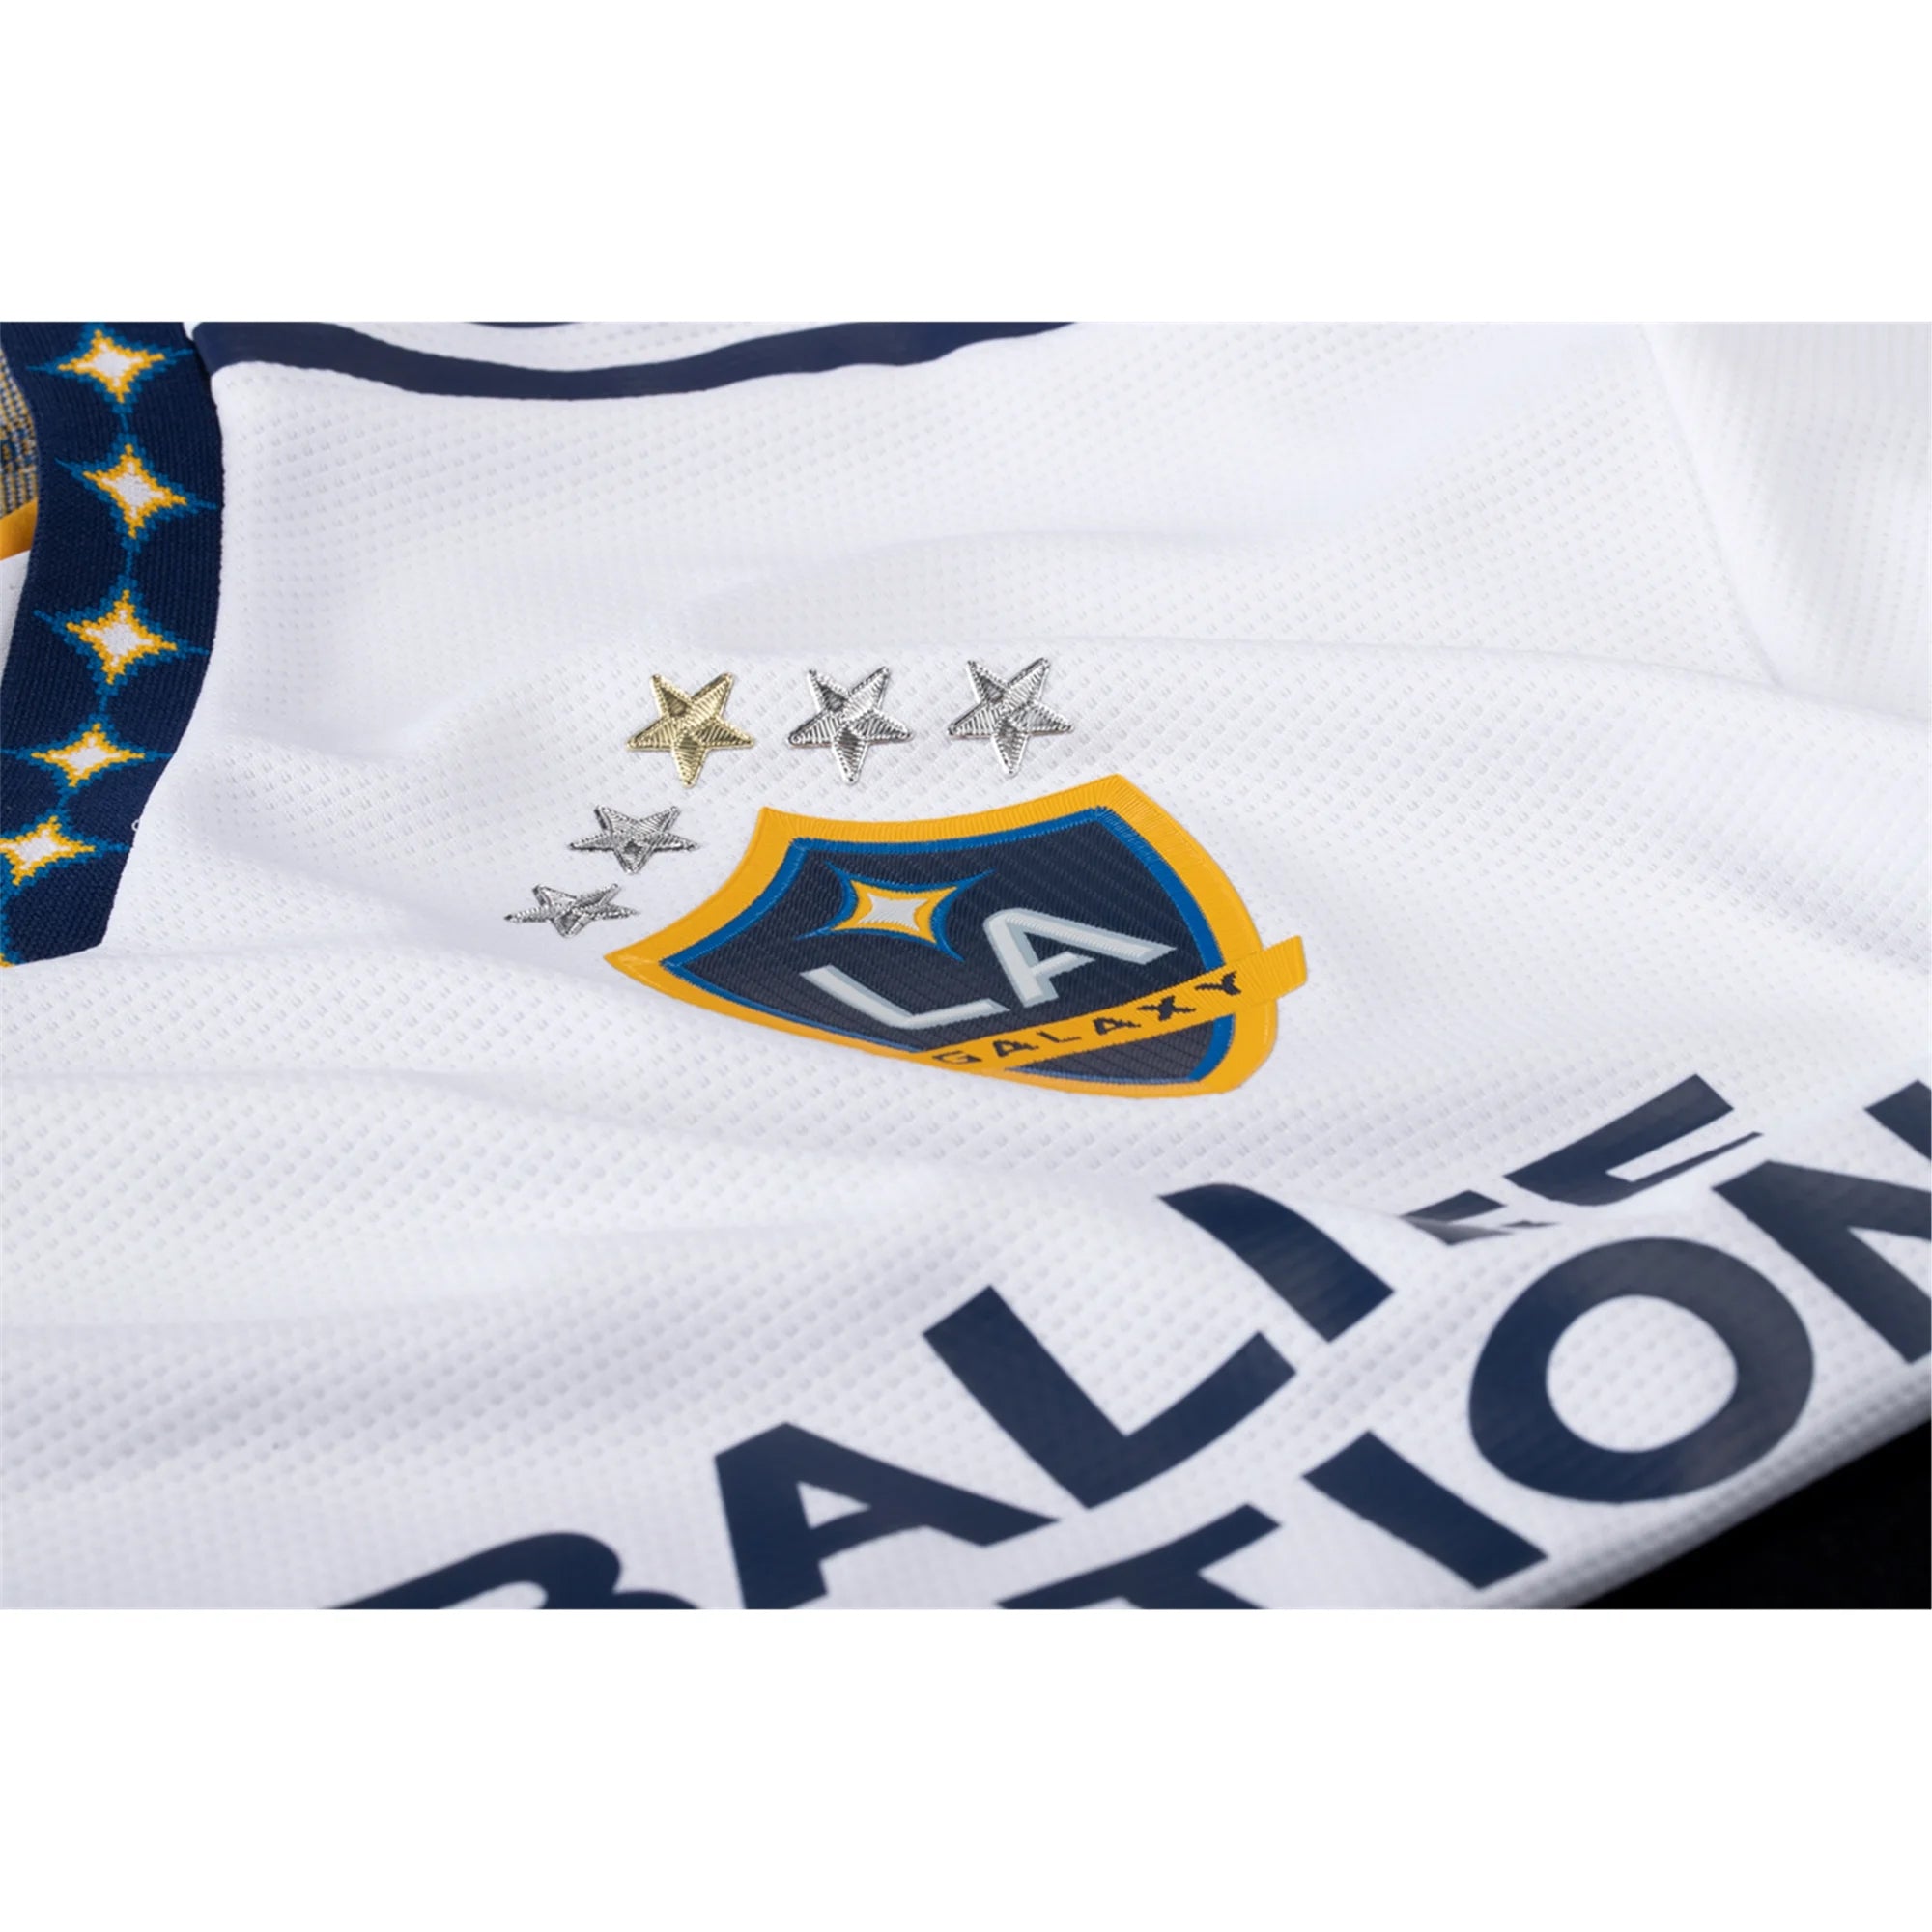 Douglas Costa LA Galaxy adidas 2021 The LA Galaxy Community Kit